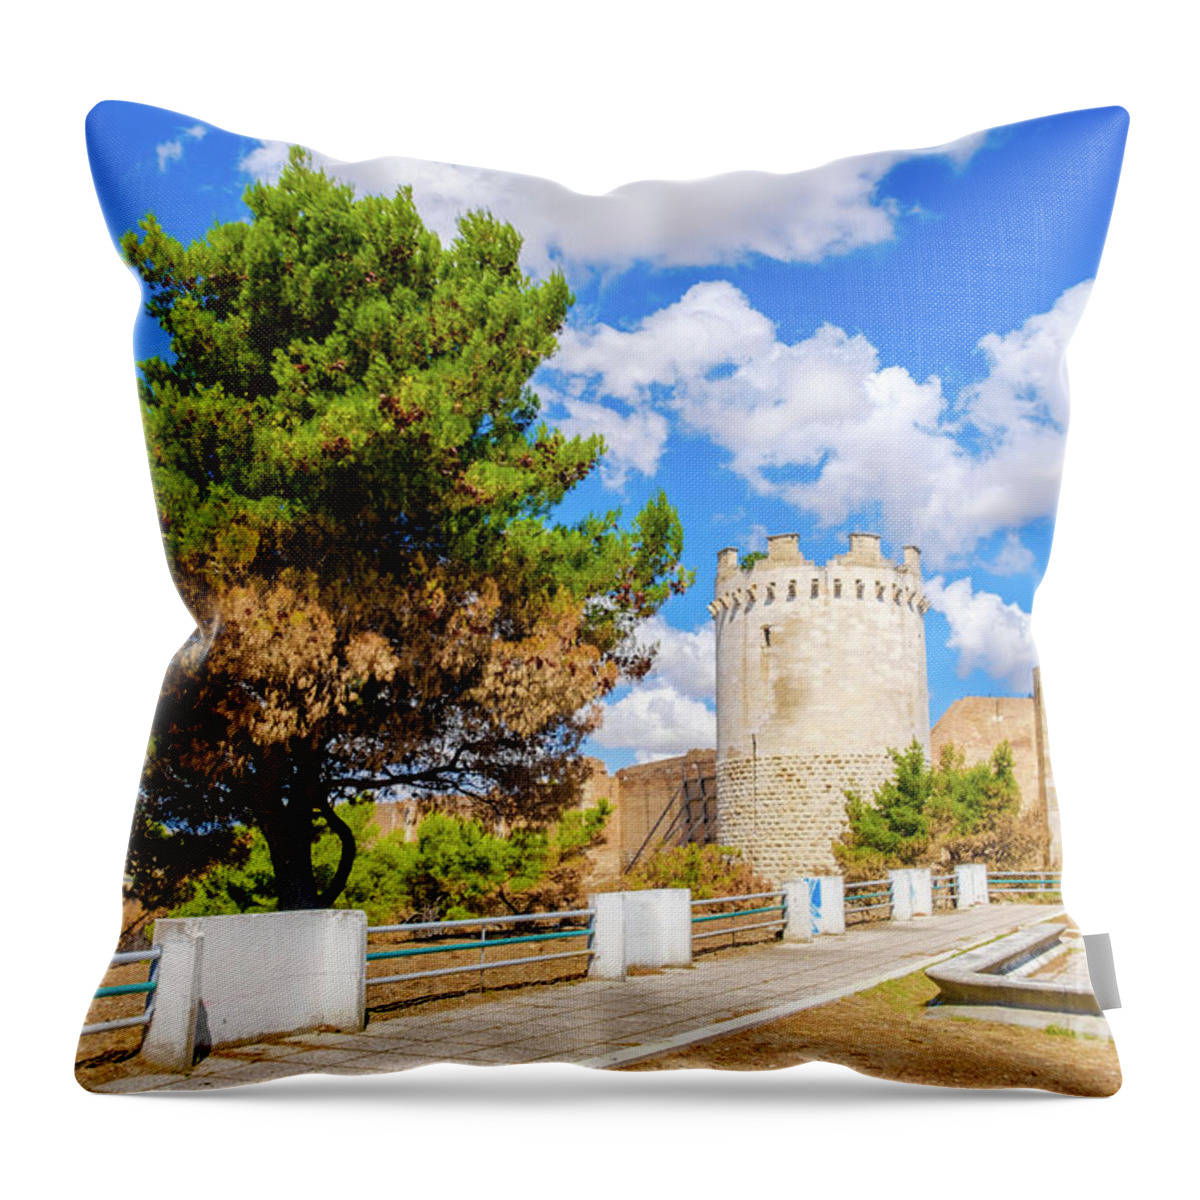 Apulia Throw Pillow featuring the photograph Lucera - Foggia province - Apulia region - Gargano area - southe by Luca Lorenzelli